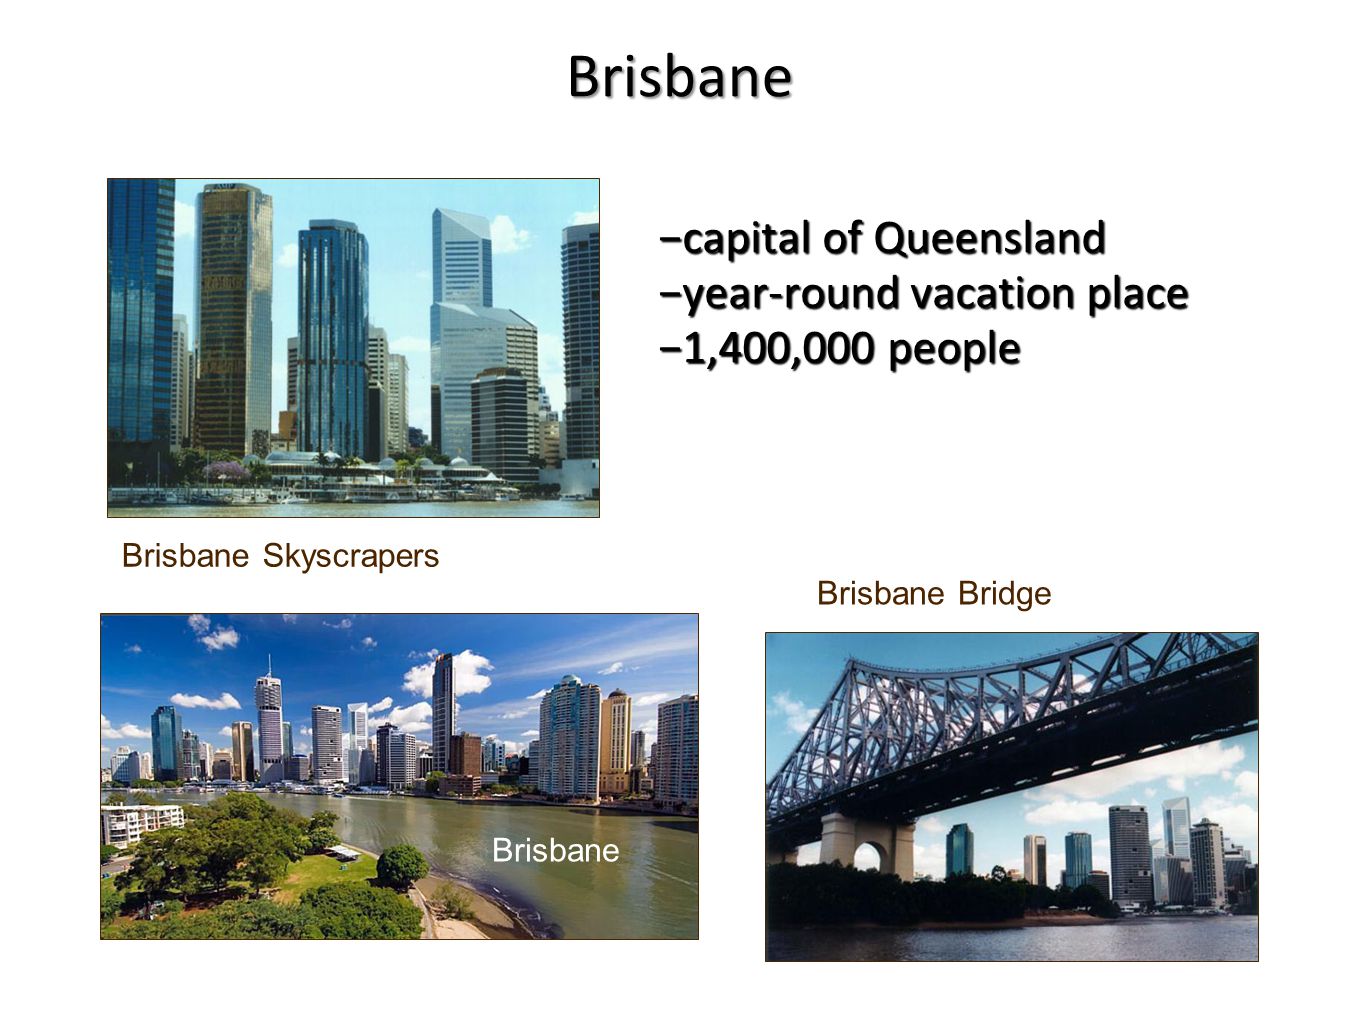 −capital of Queensland −year-round vacation place −1,400,000 people Brisbane Bridge Brisbane Skyscrapers Brisbane Brisbane